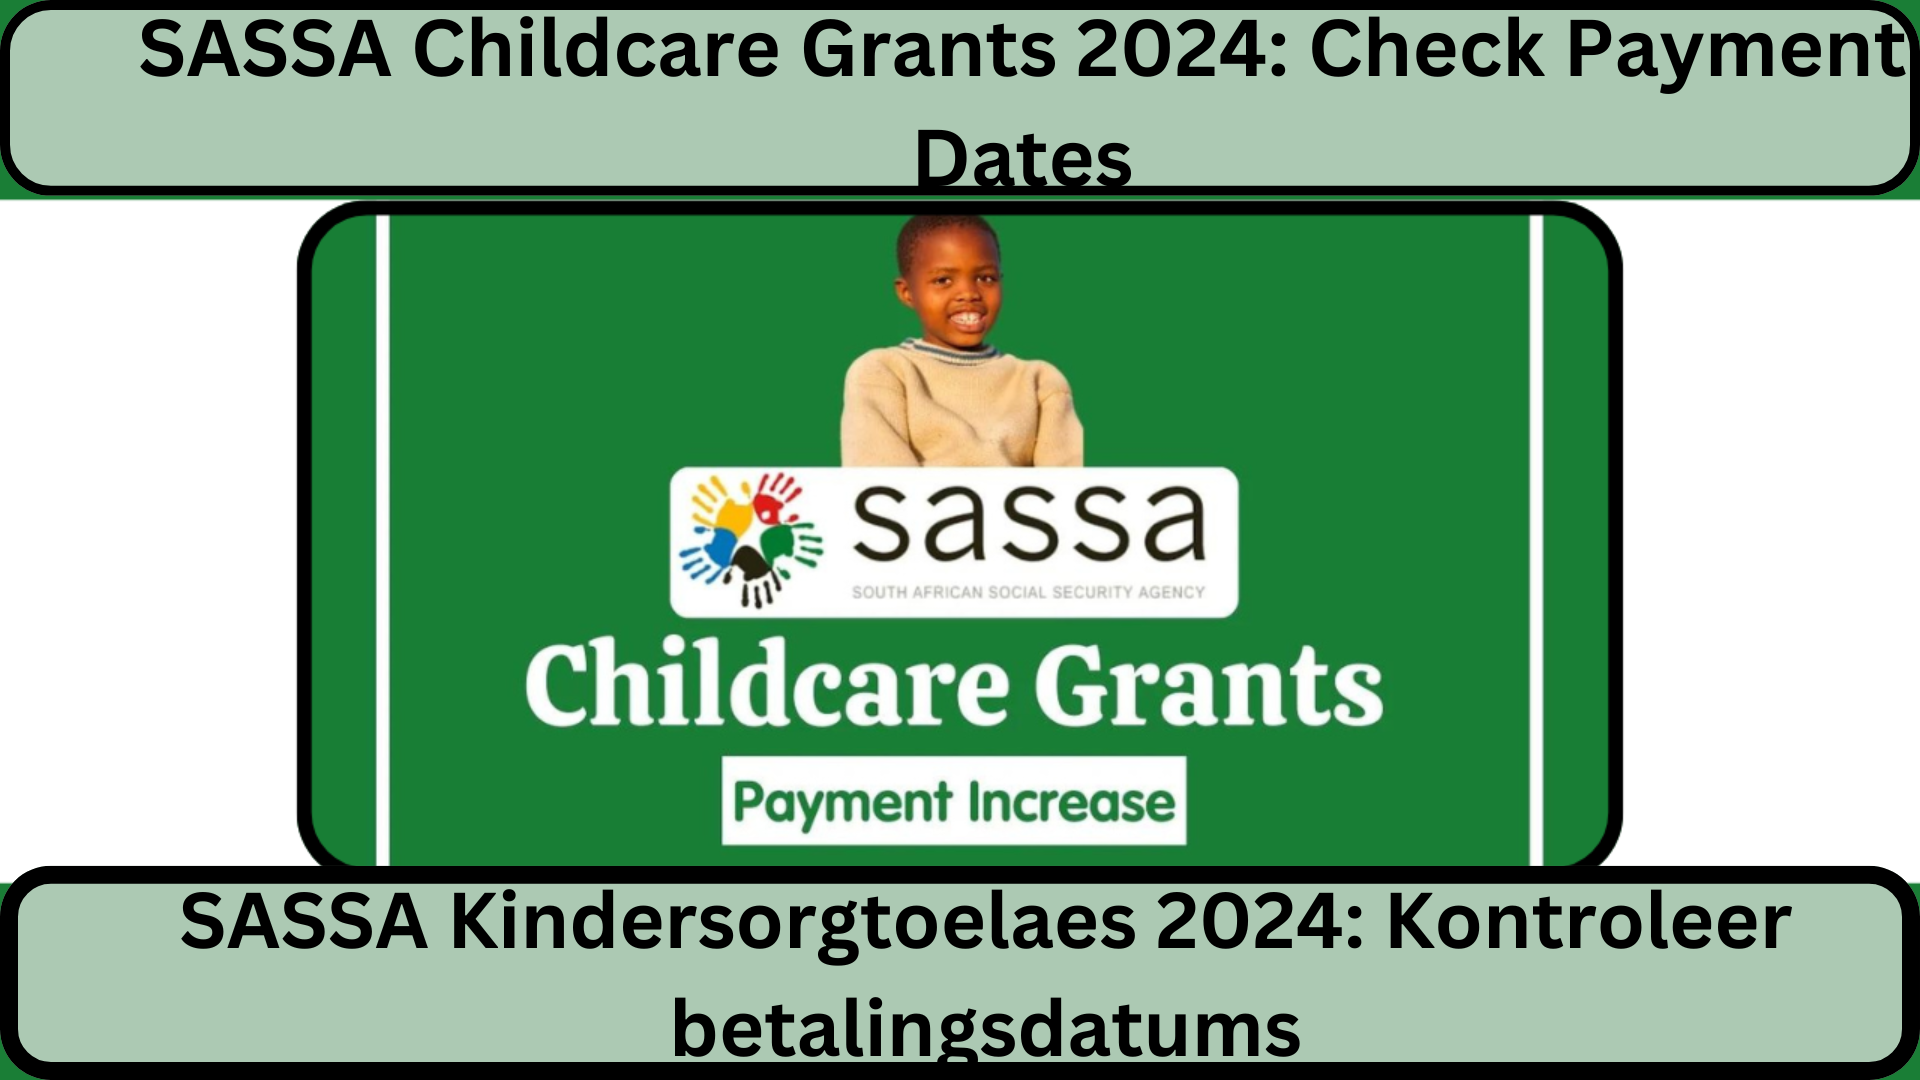 SASSA Childcare Grants 2024: Check Payment Dates